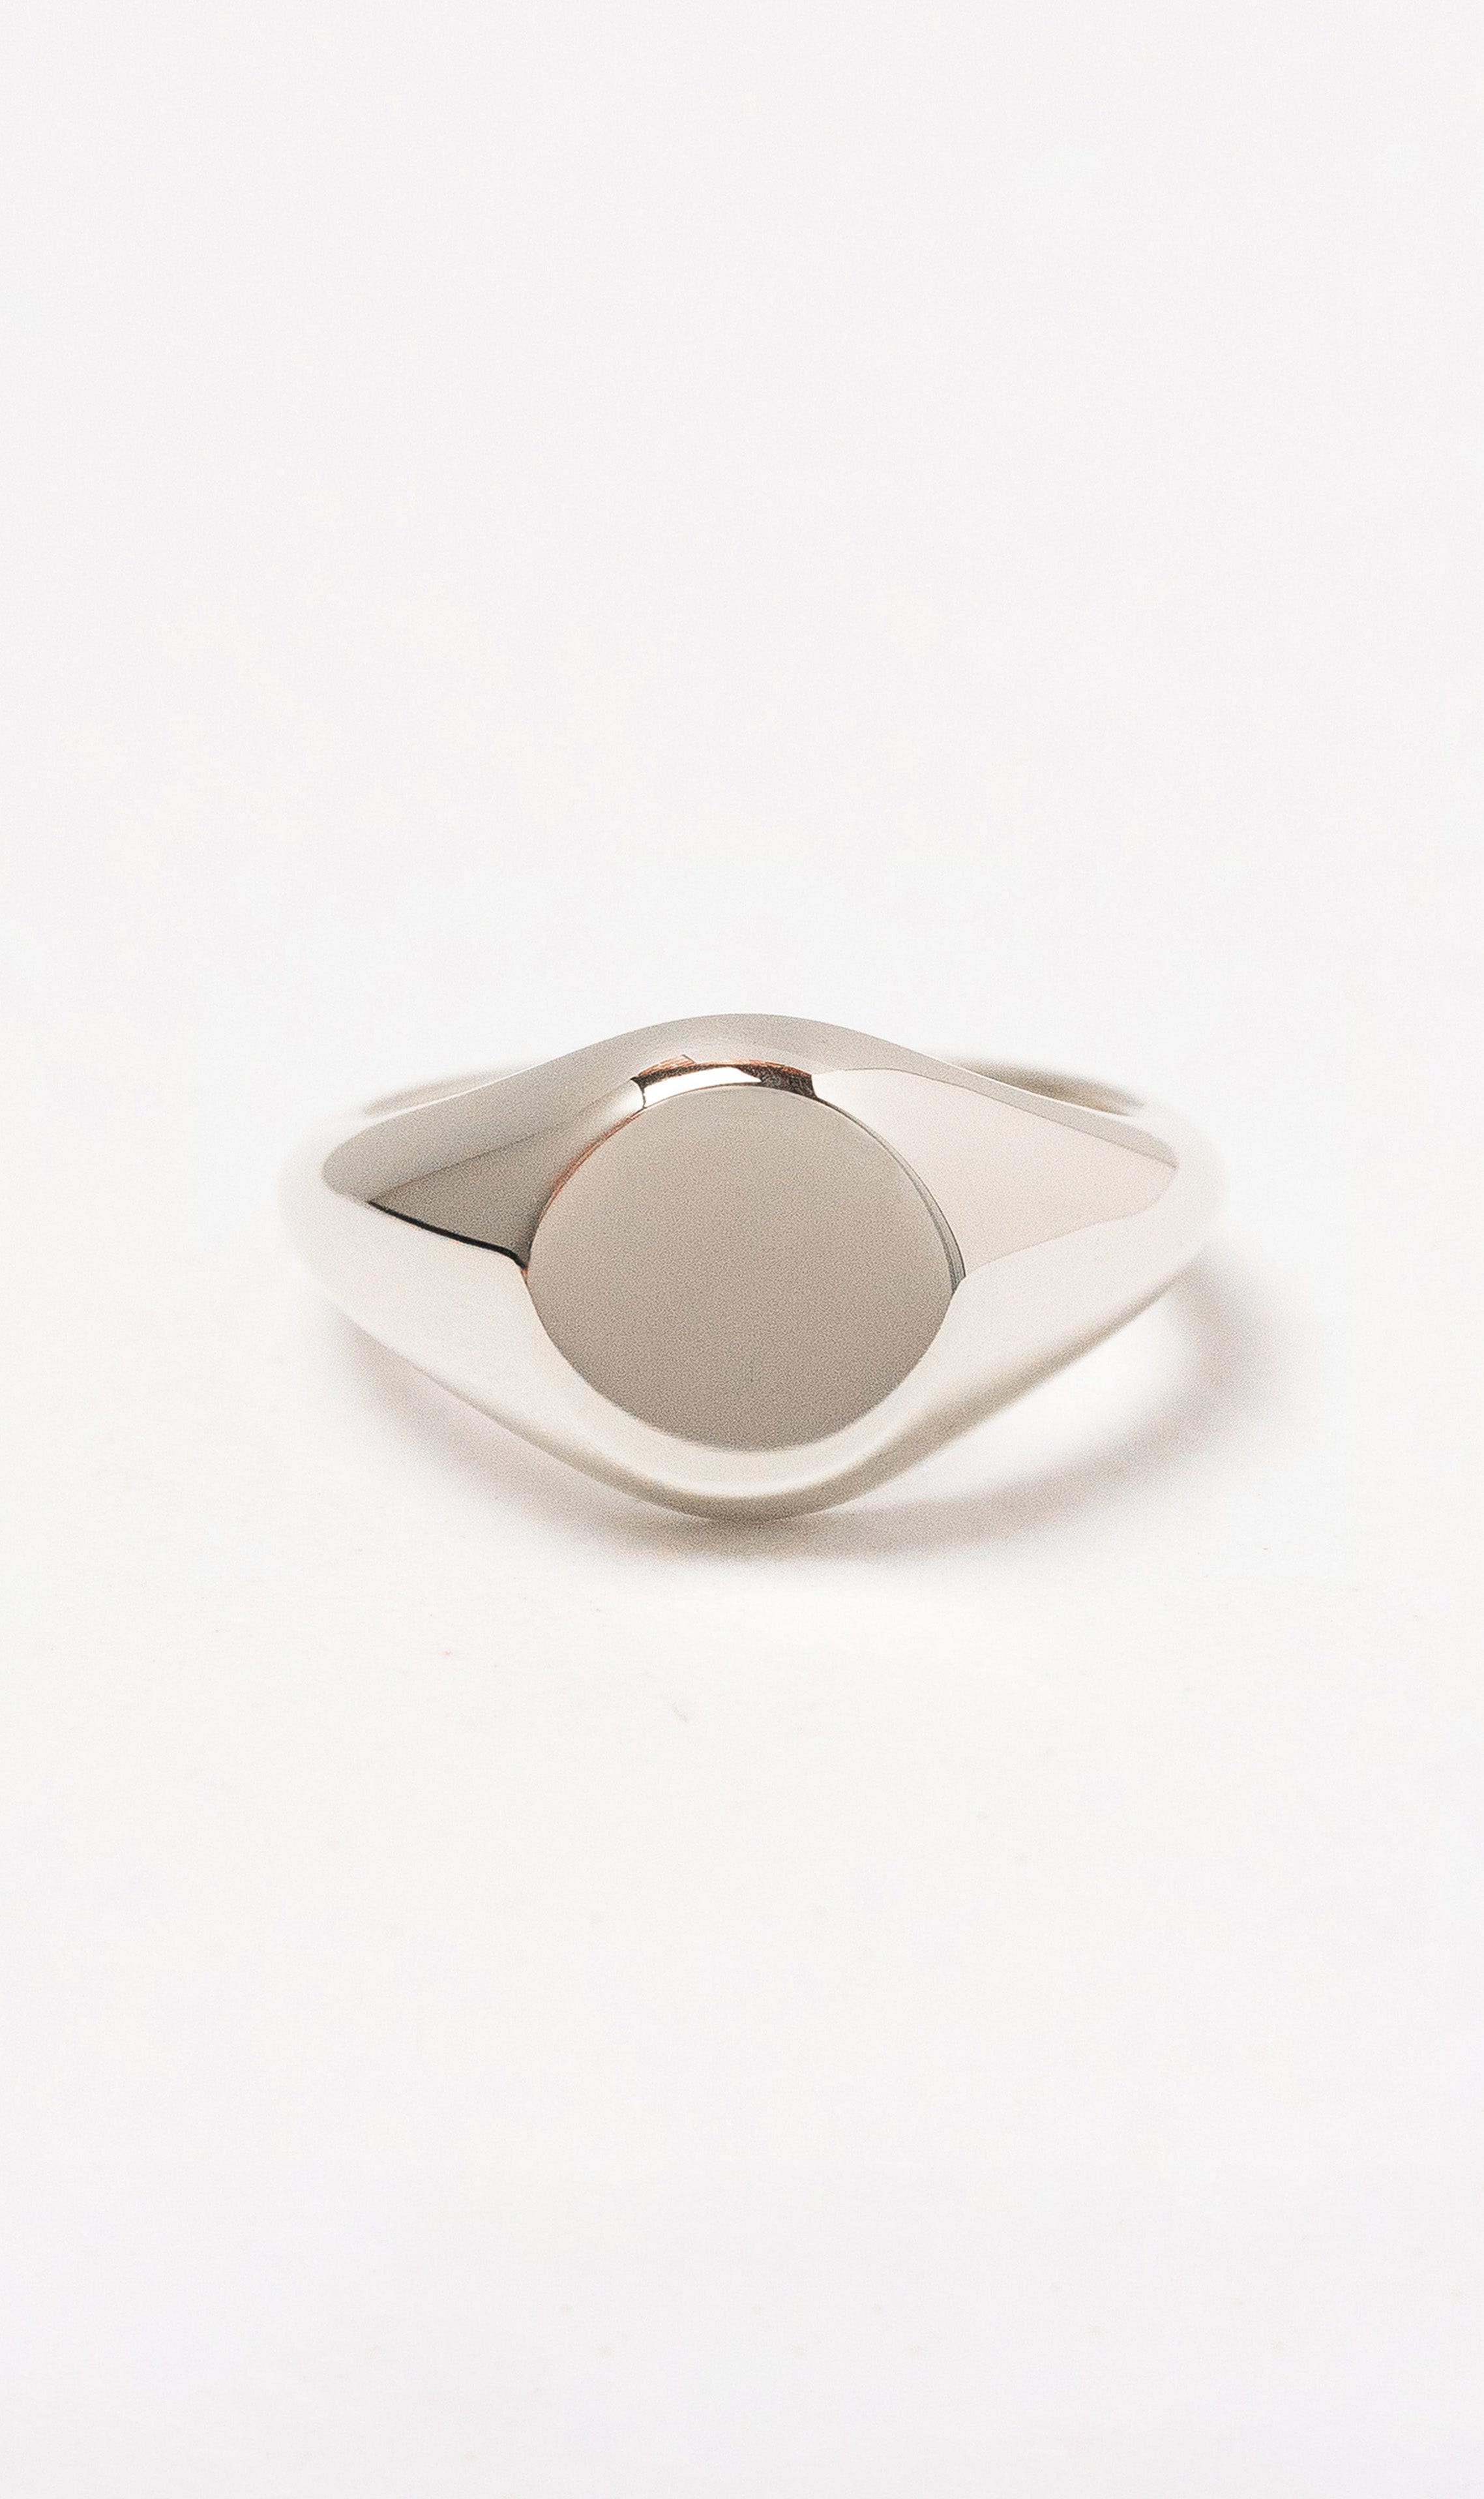 Hogans Family Jewellers 9K Medium Round Signet Ring